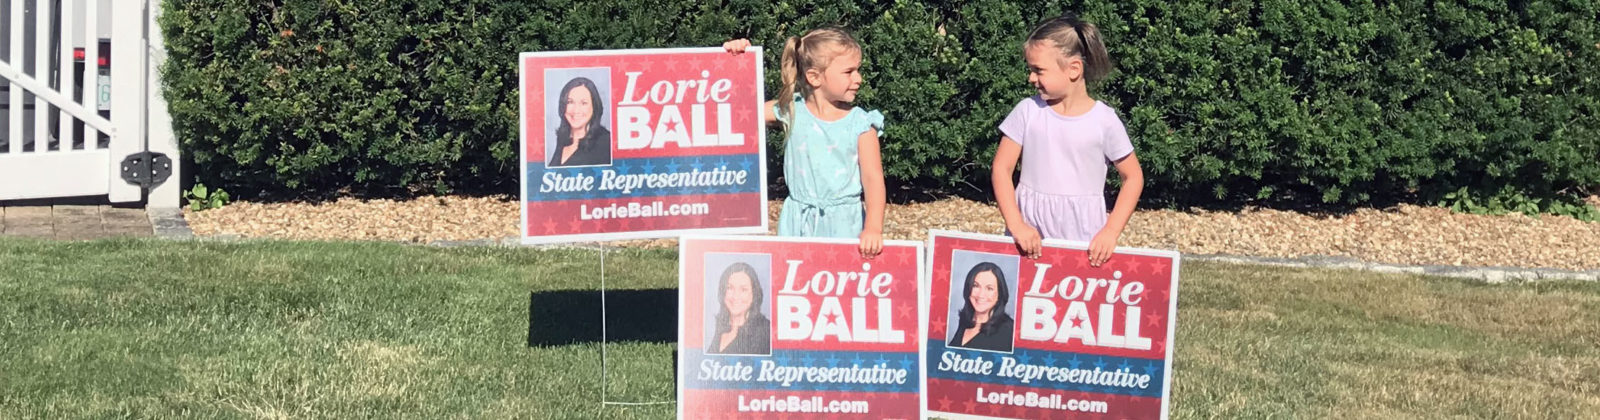 Loire Ball for Salem, NH State Representative